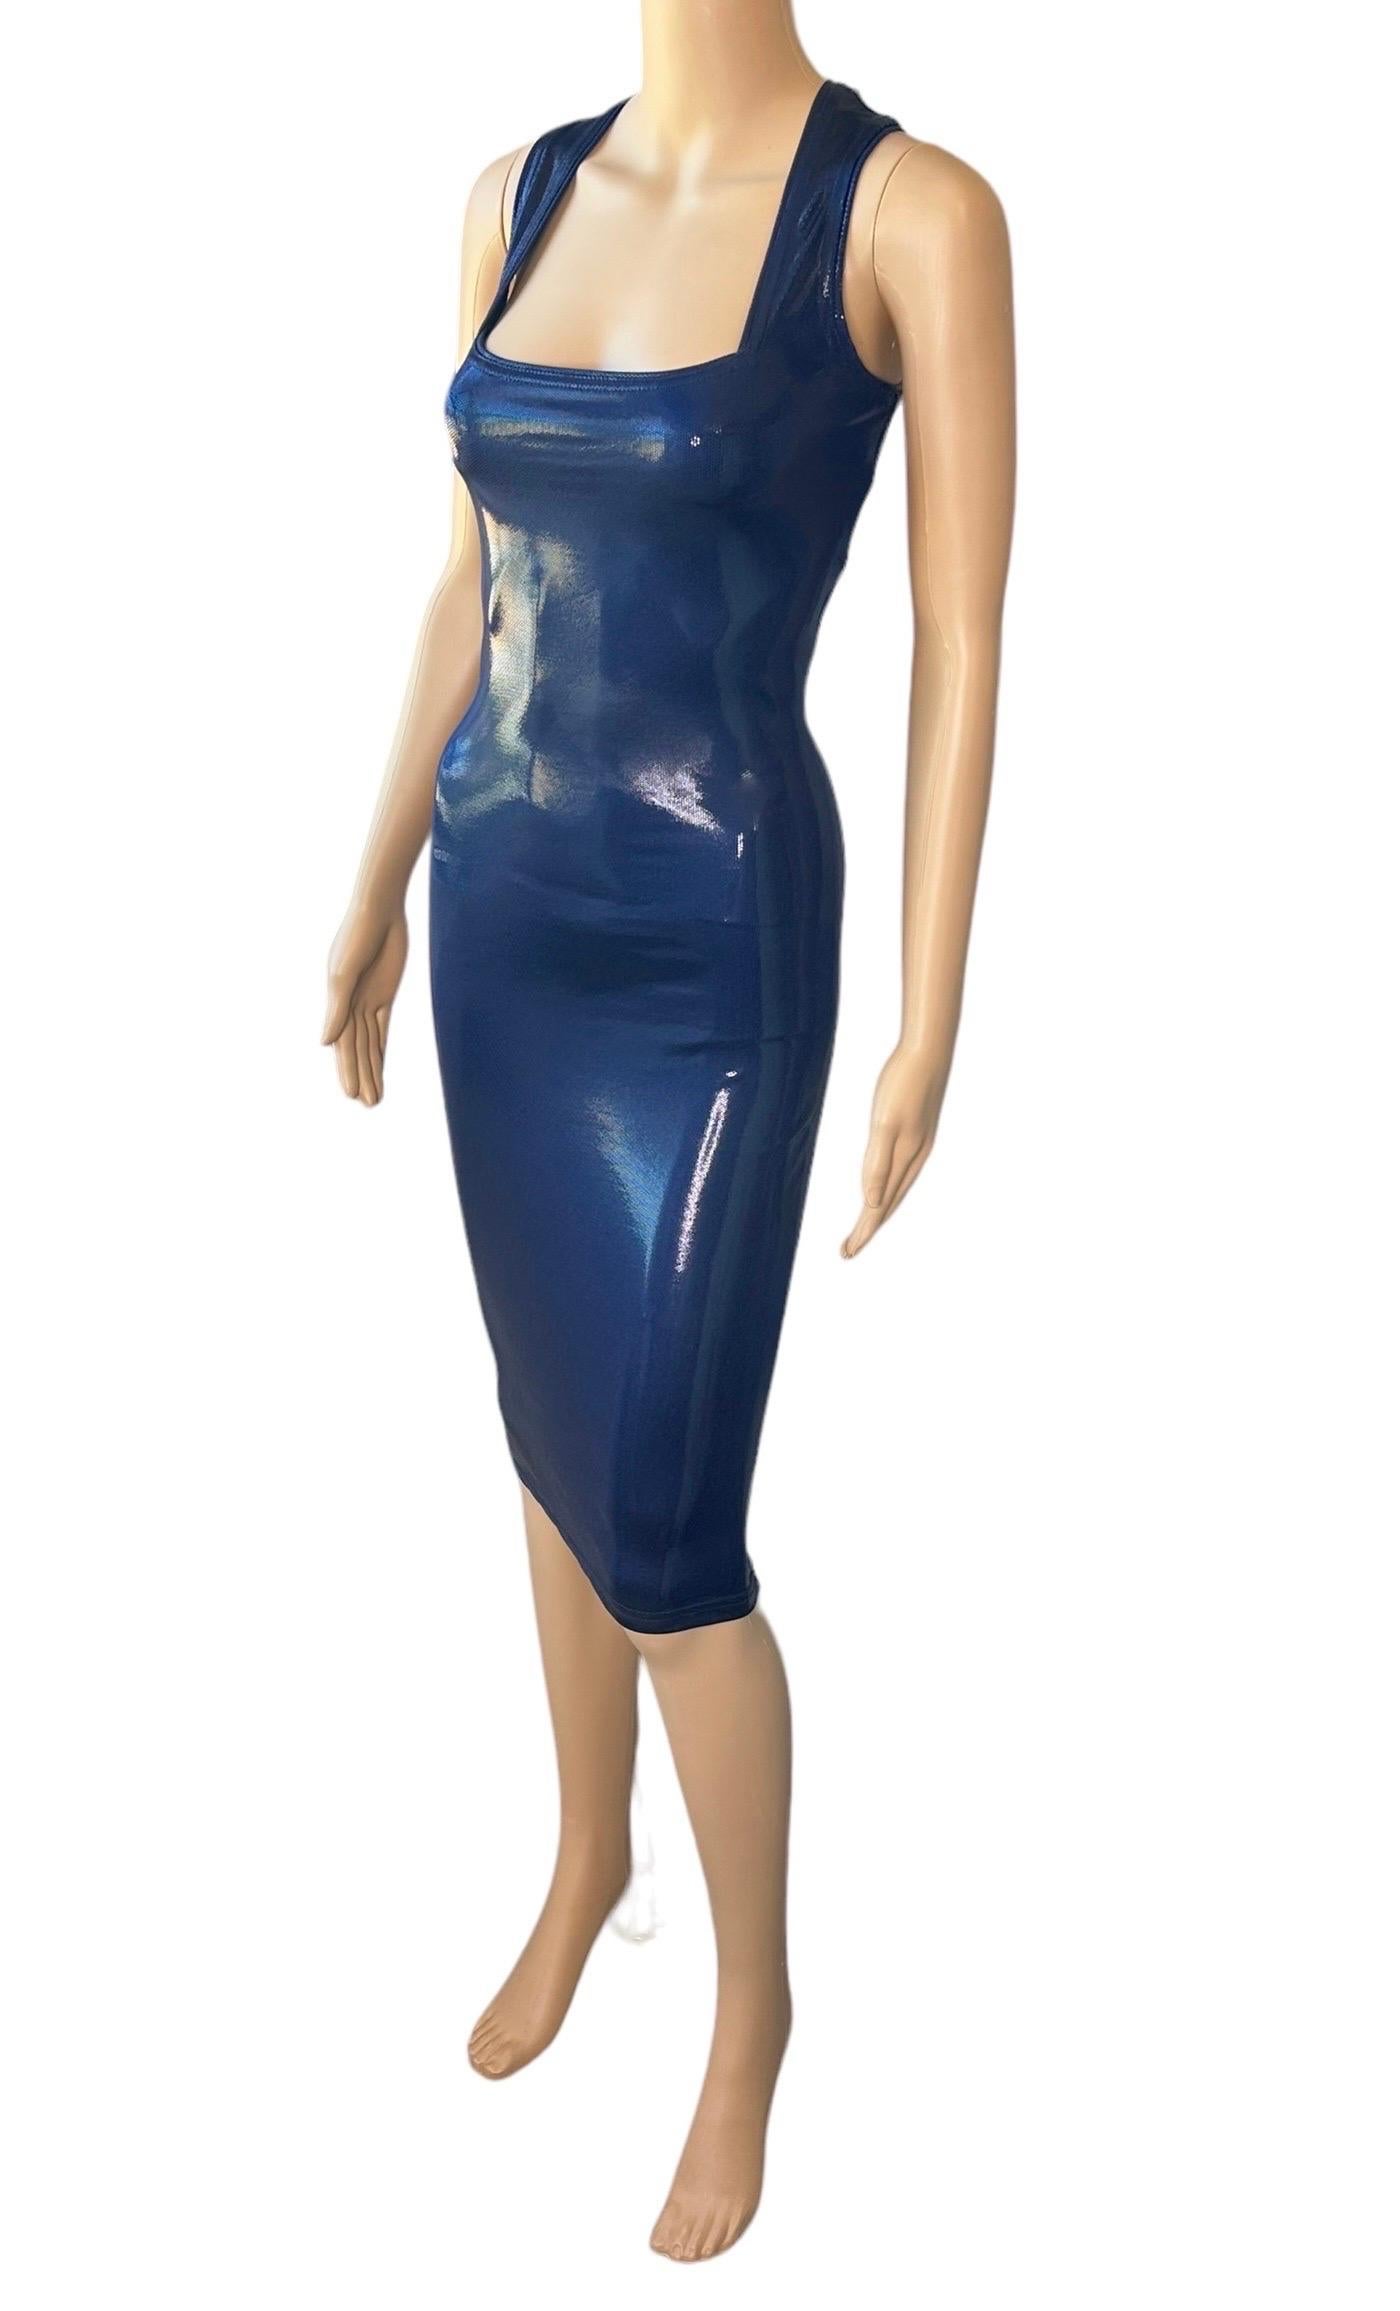 Gianni Versace c. 1994 Vintage Wet Look Stretch Bodycon Navy Blue Midi Dress 7